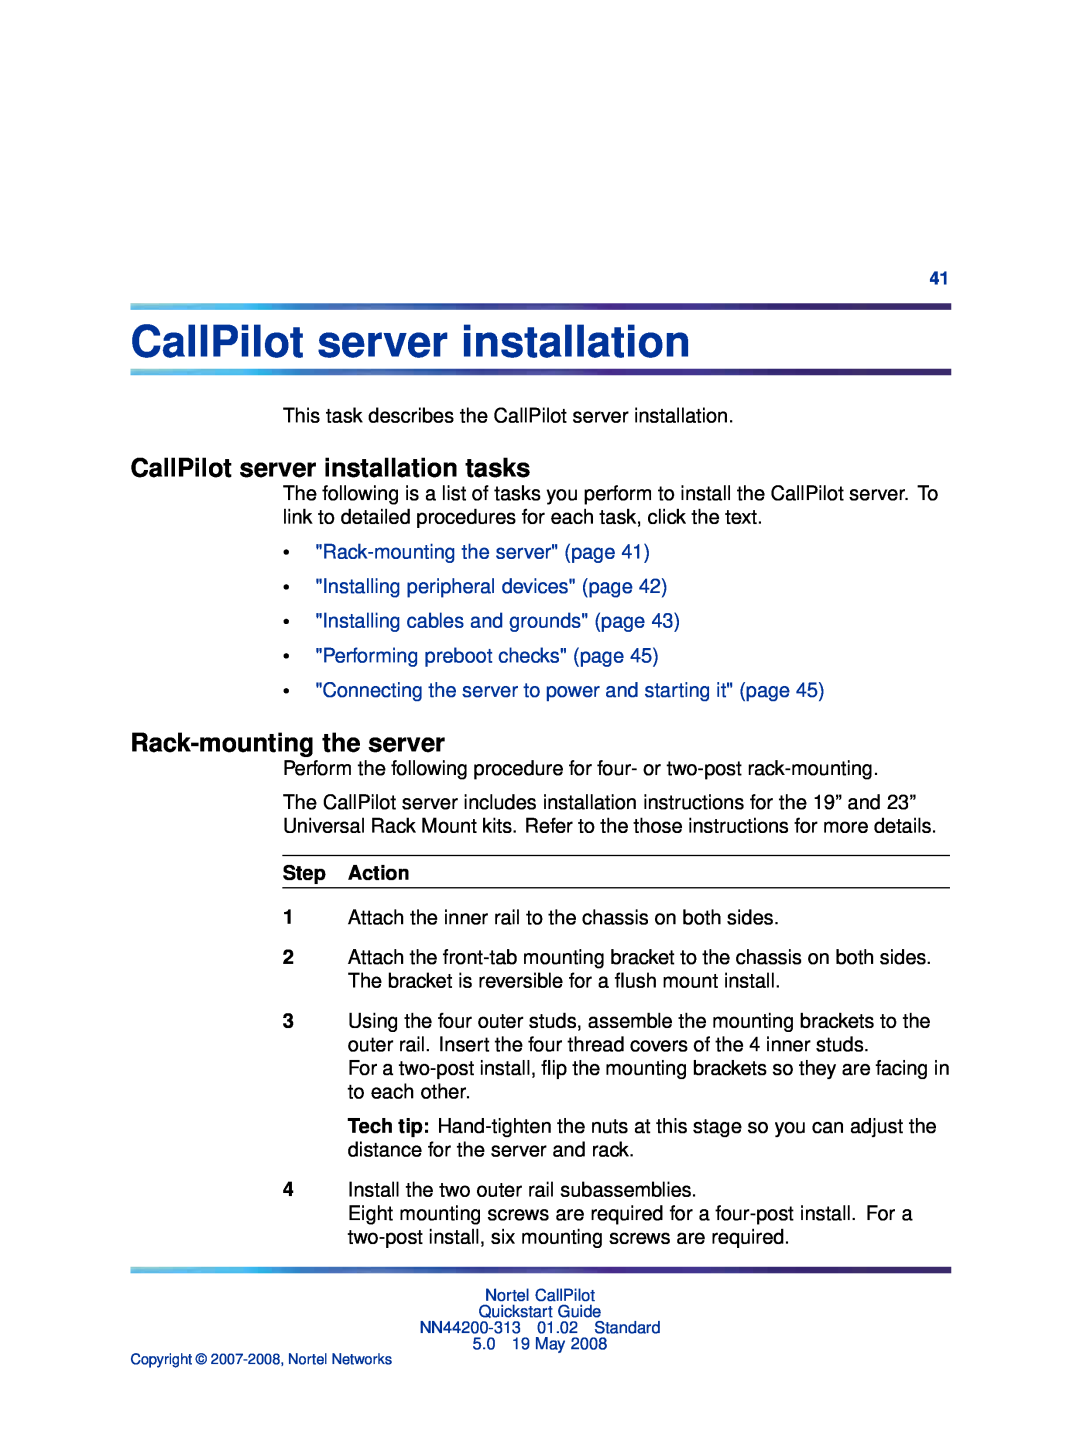 Nortel Networks NN44200-313 quick start CallPilot server installation tasks, Rack-mounting the server, Step Action 